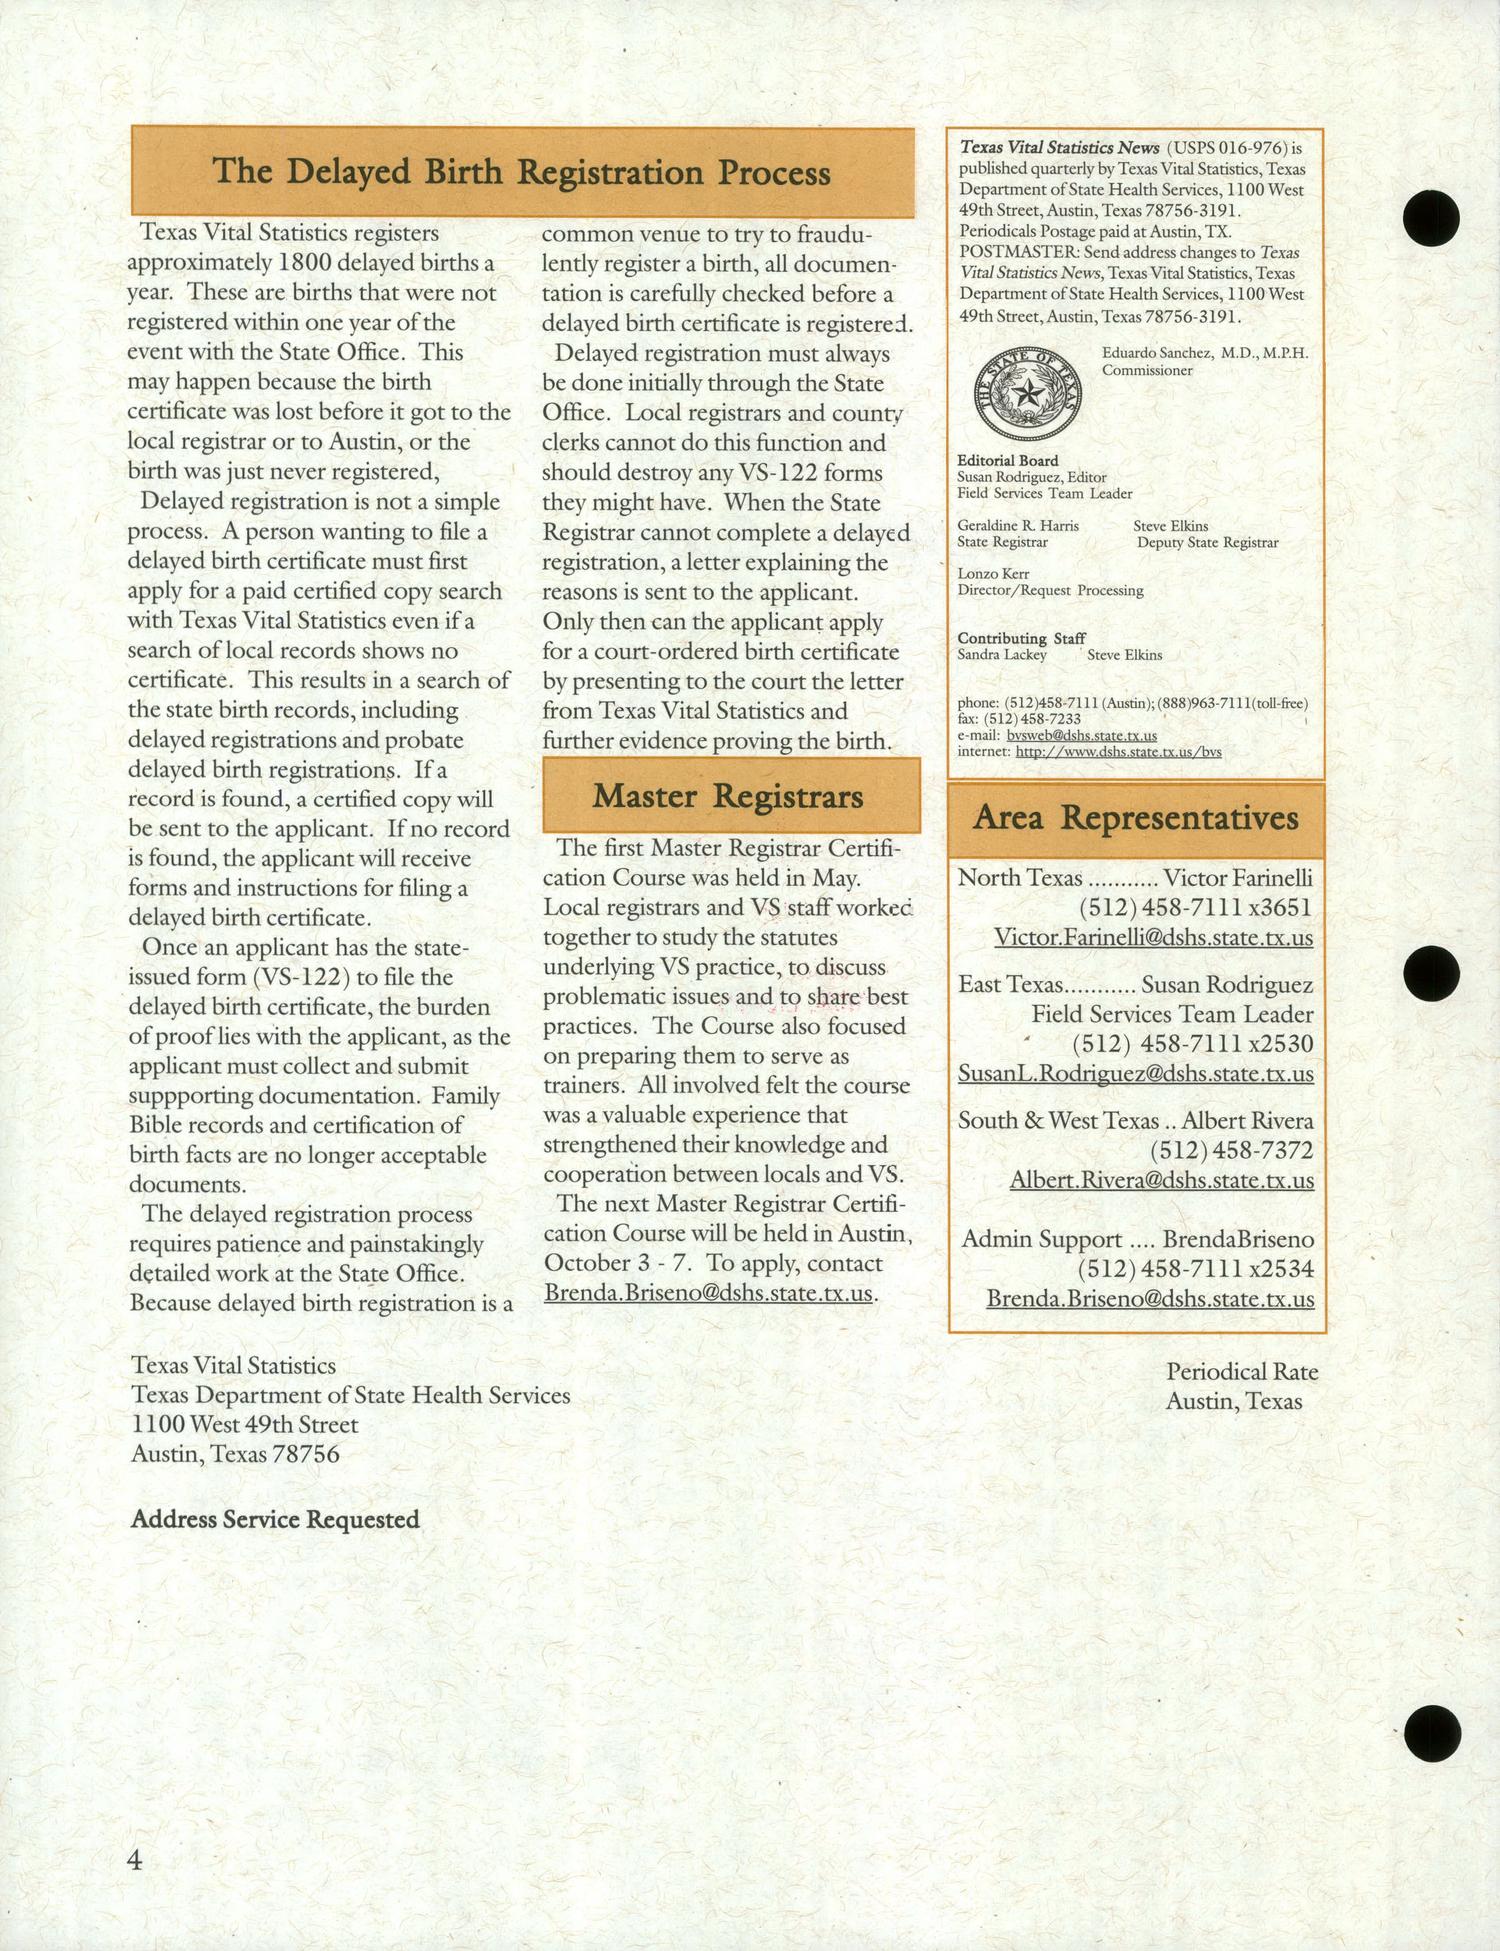 Texas Vital Statistics News, Volume 8, Number 2, Spring 2005
                                                
                                                    BACK COVER
                                                